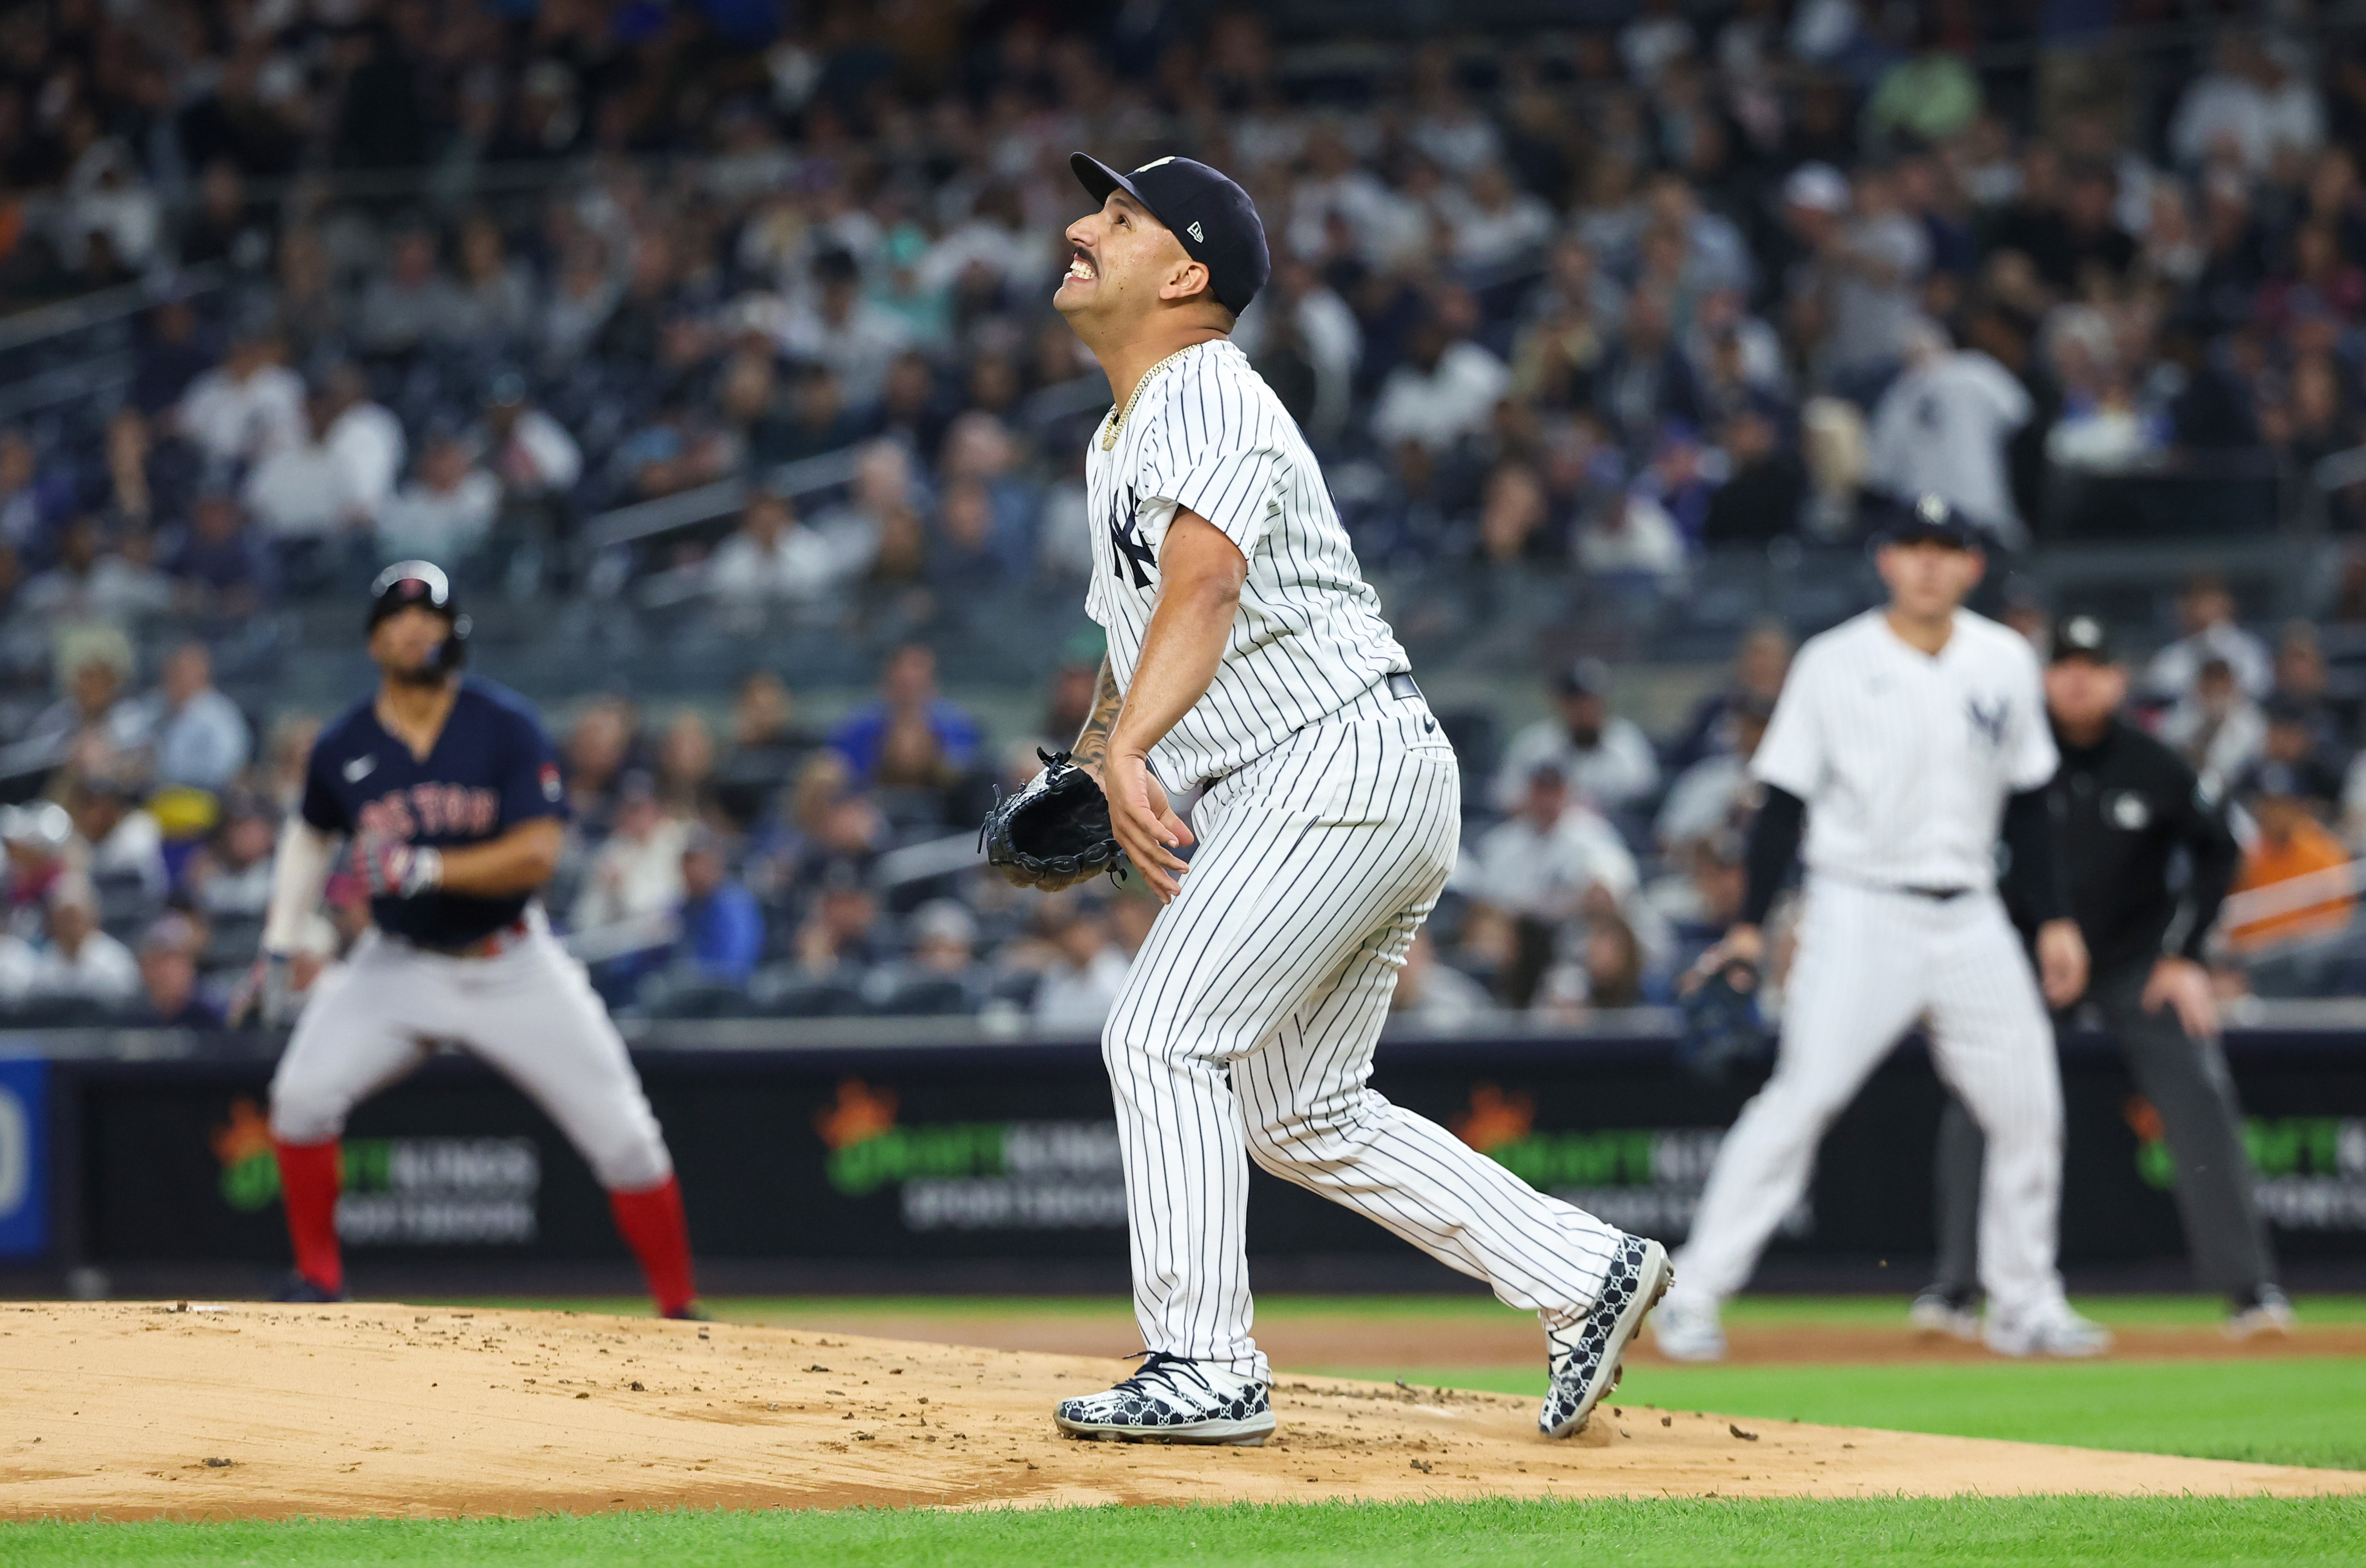 New York Yankee Breaking News: Yankees add center field depth with Locastro